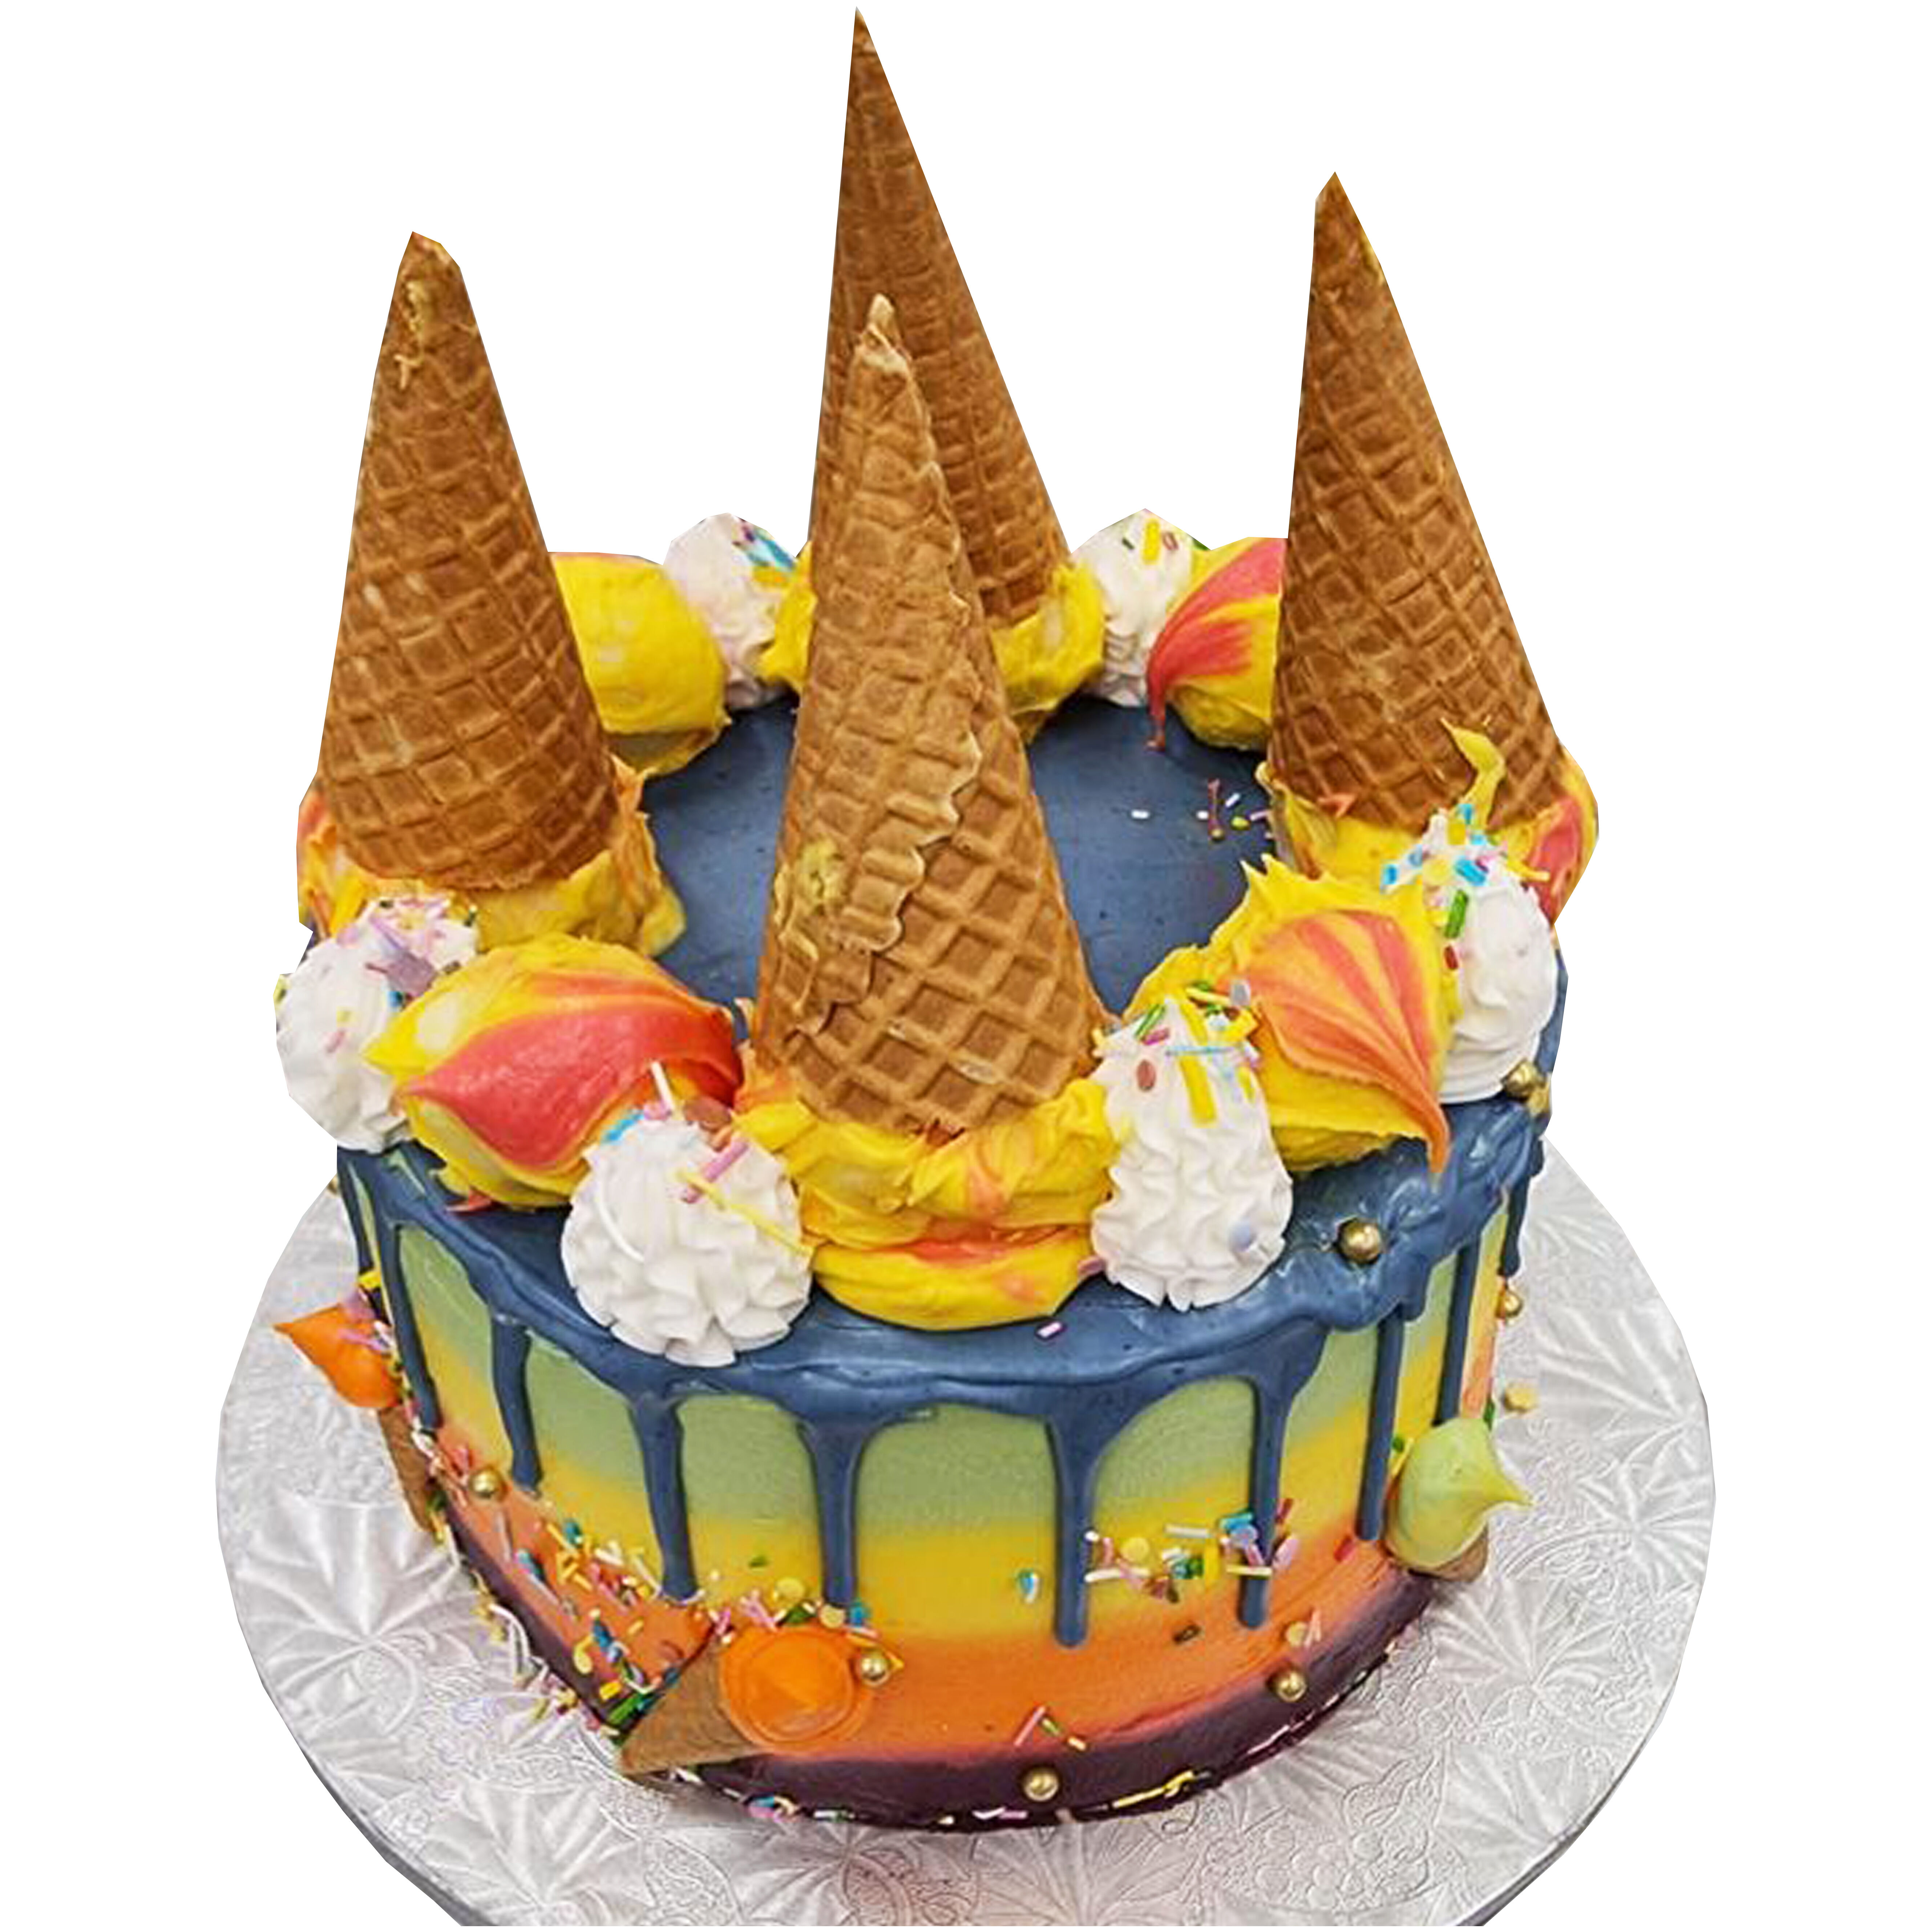 Spider-Man Cream Cake | Cake for Kids' Birthday Party | Pandoracake.ae Dubai